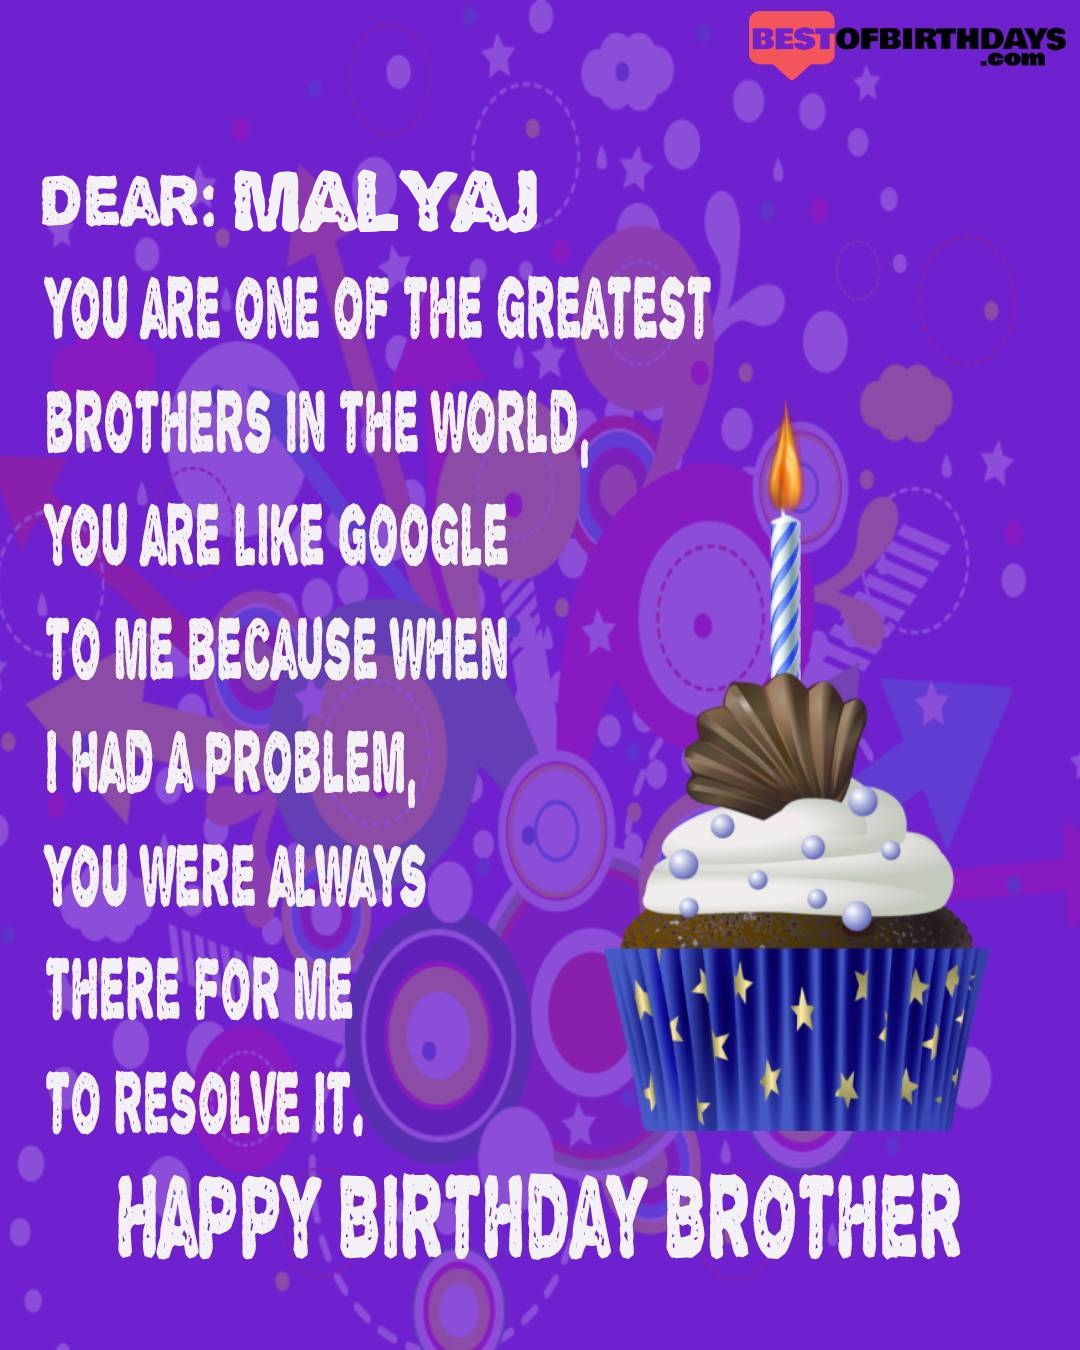 Happy birthday malyaj bhai brother bro